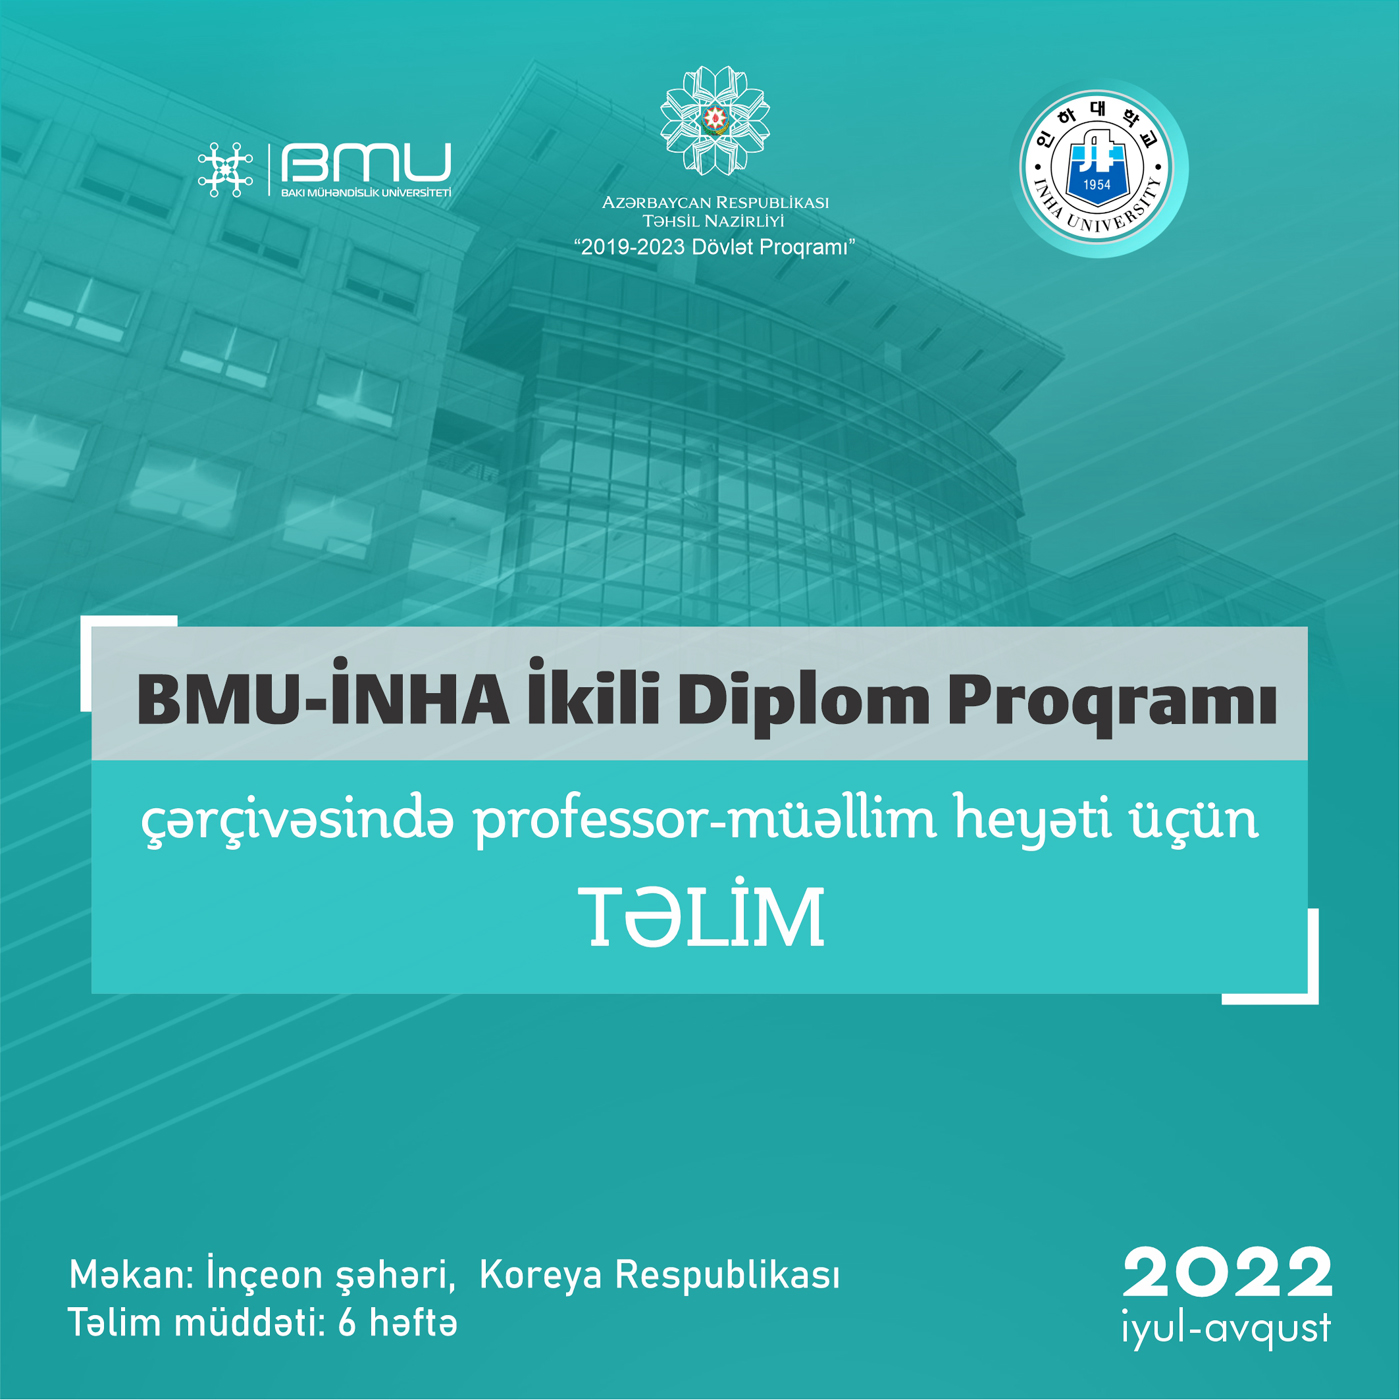 Training for academic staff as part of BEU-INHA Dual Degree Program